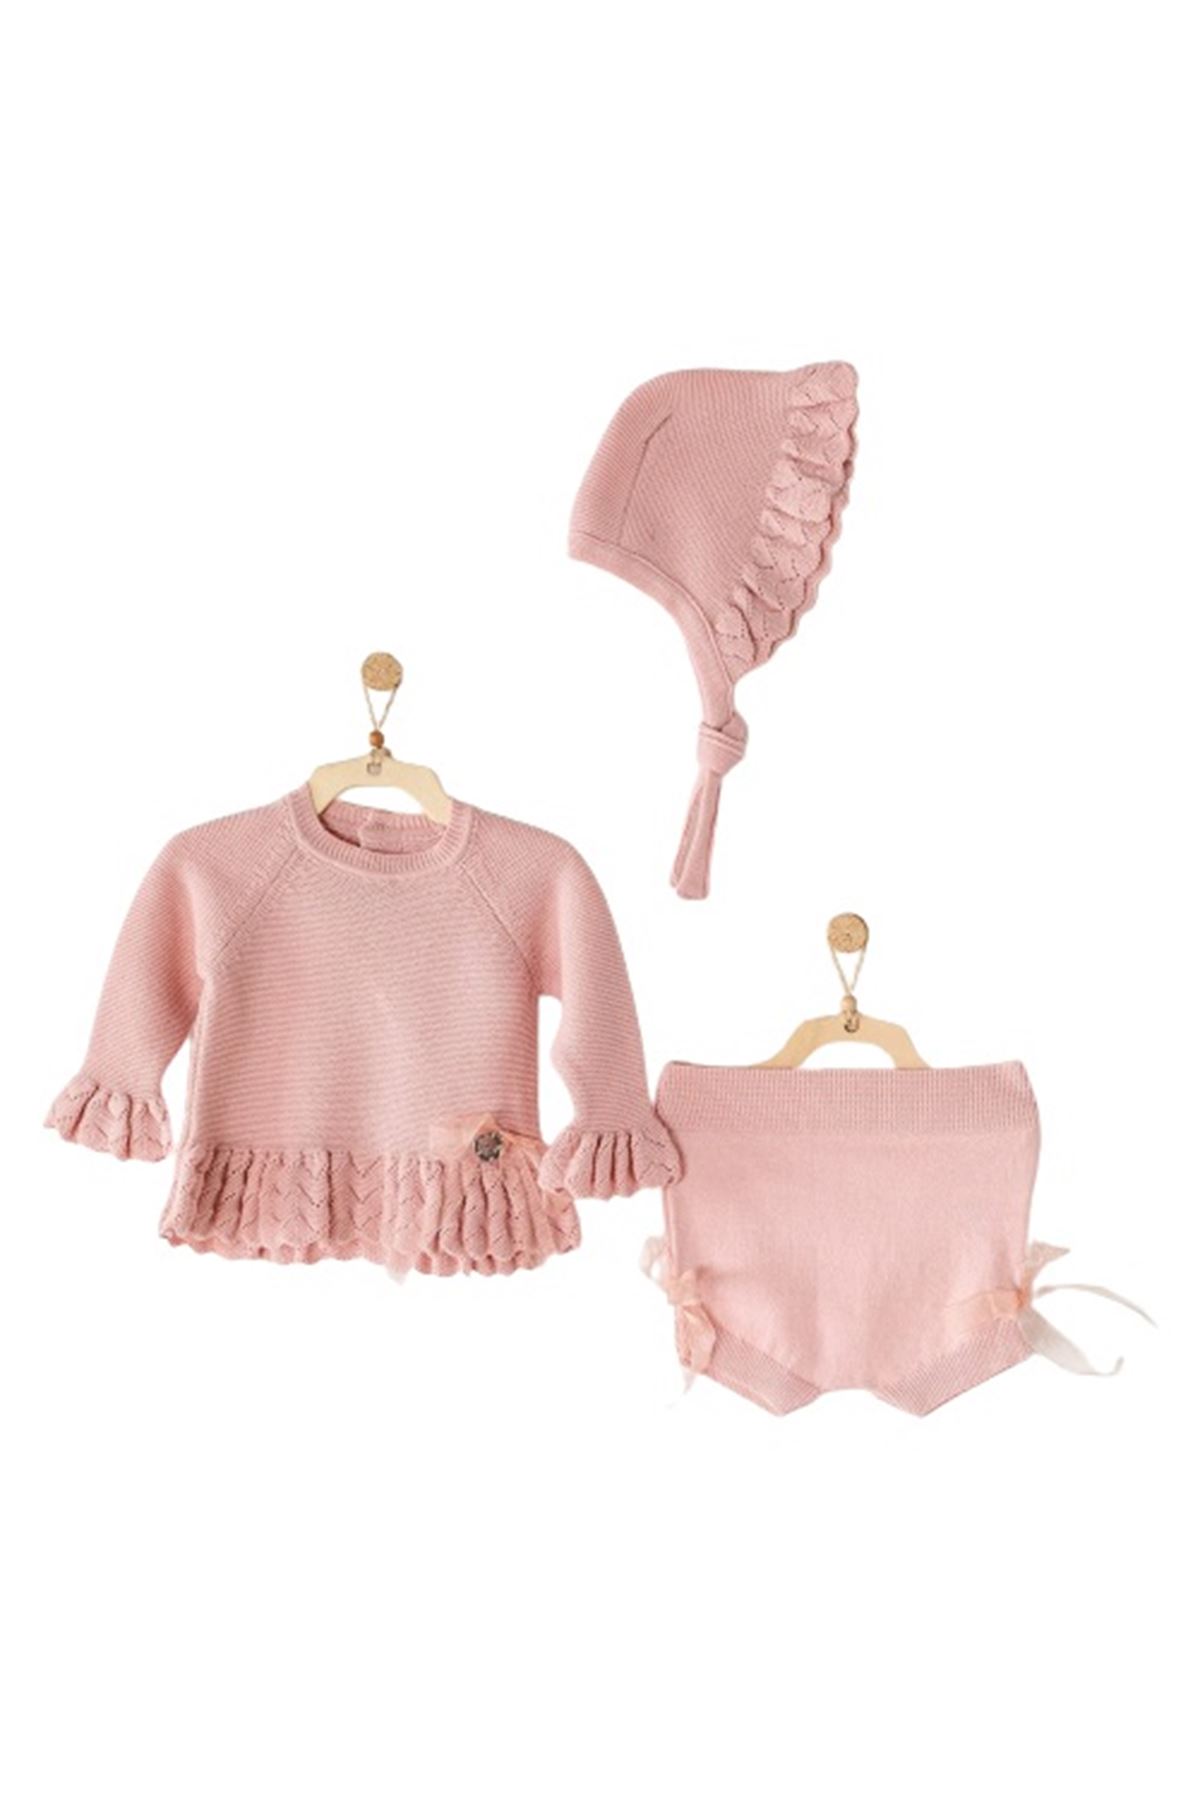 Andywawa AC23200 Knitwear 3Lü Bebek Triko Takım Pink